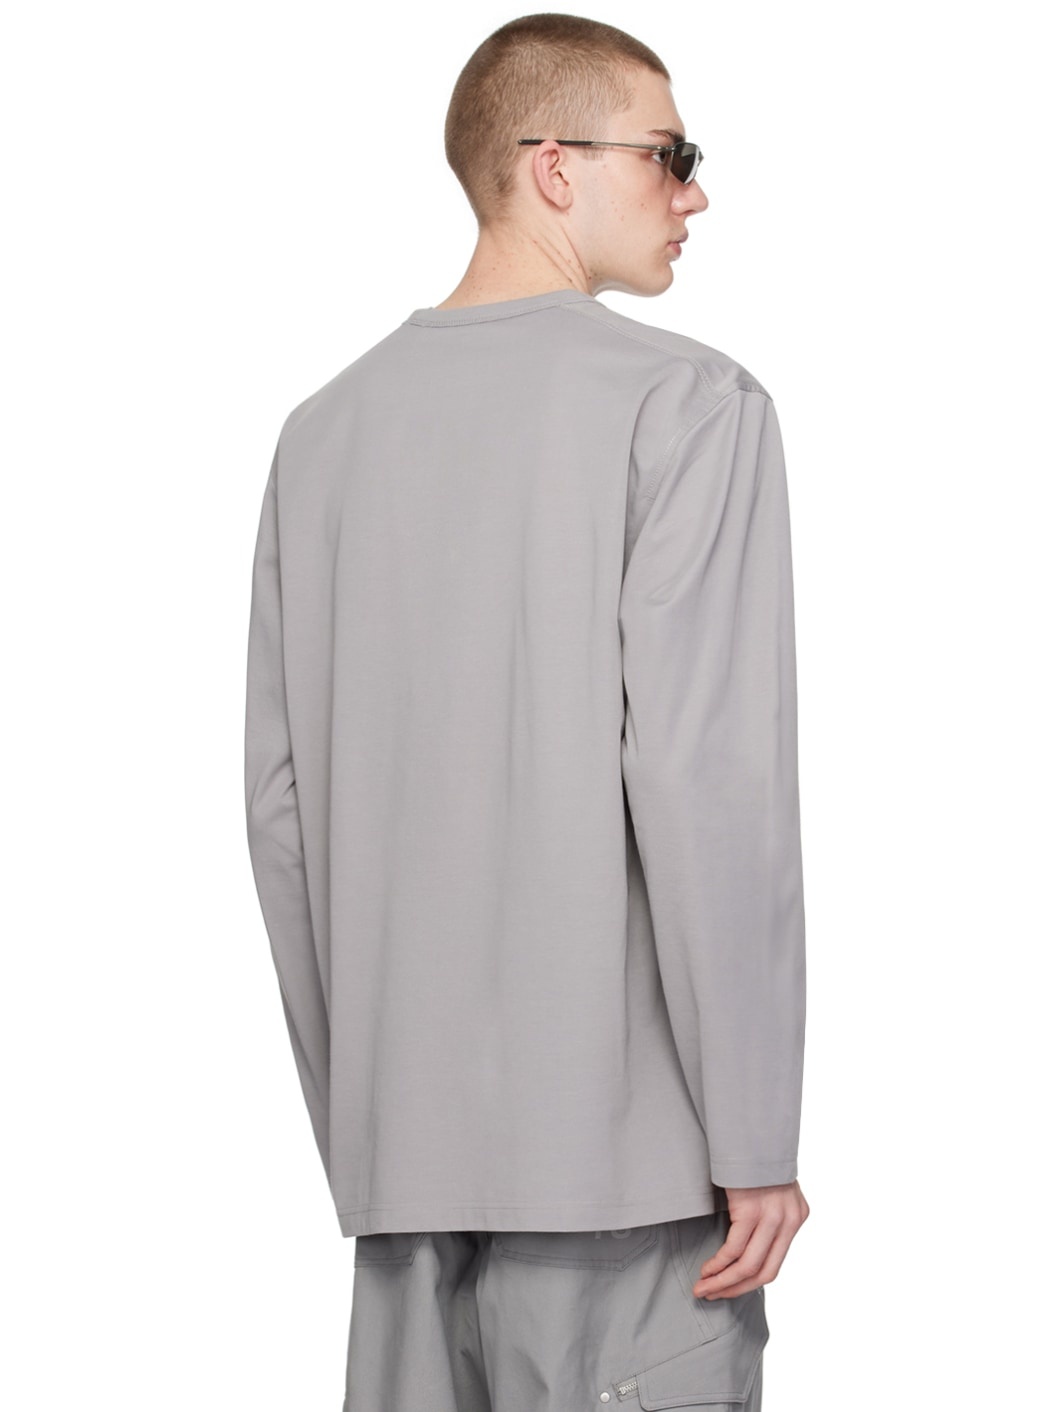 Gray Premium Long Sleeve T-Shirt - 3